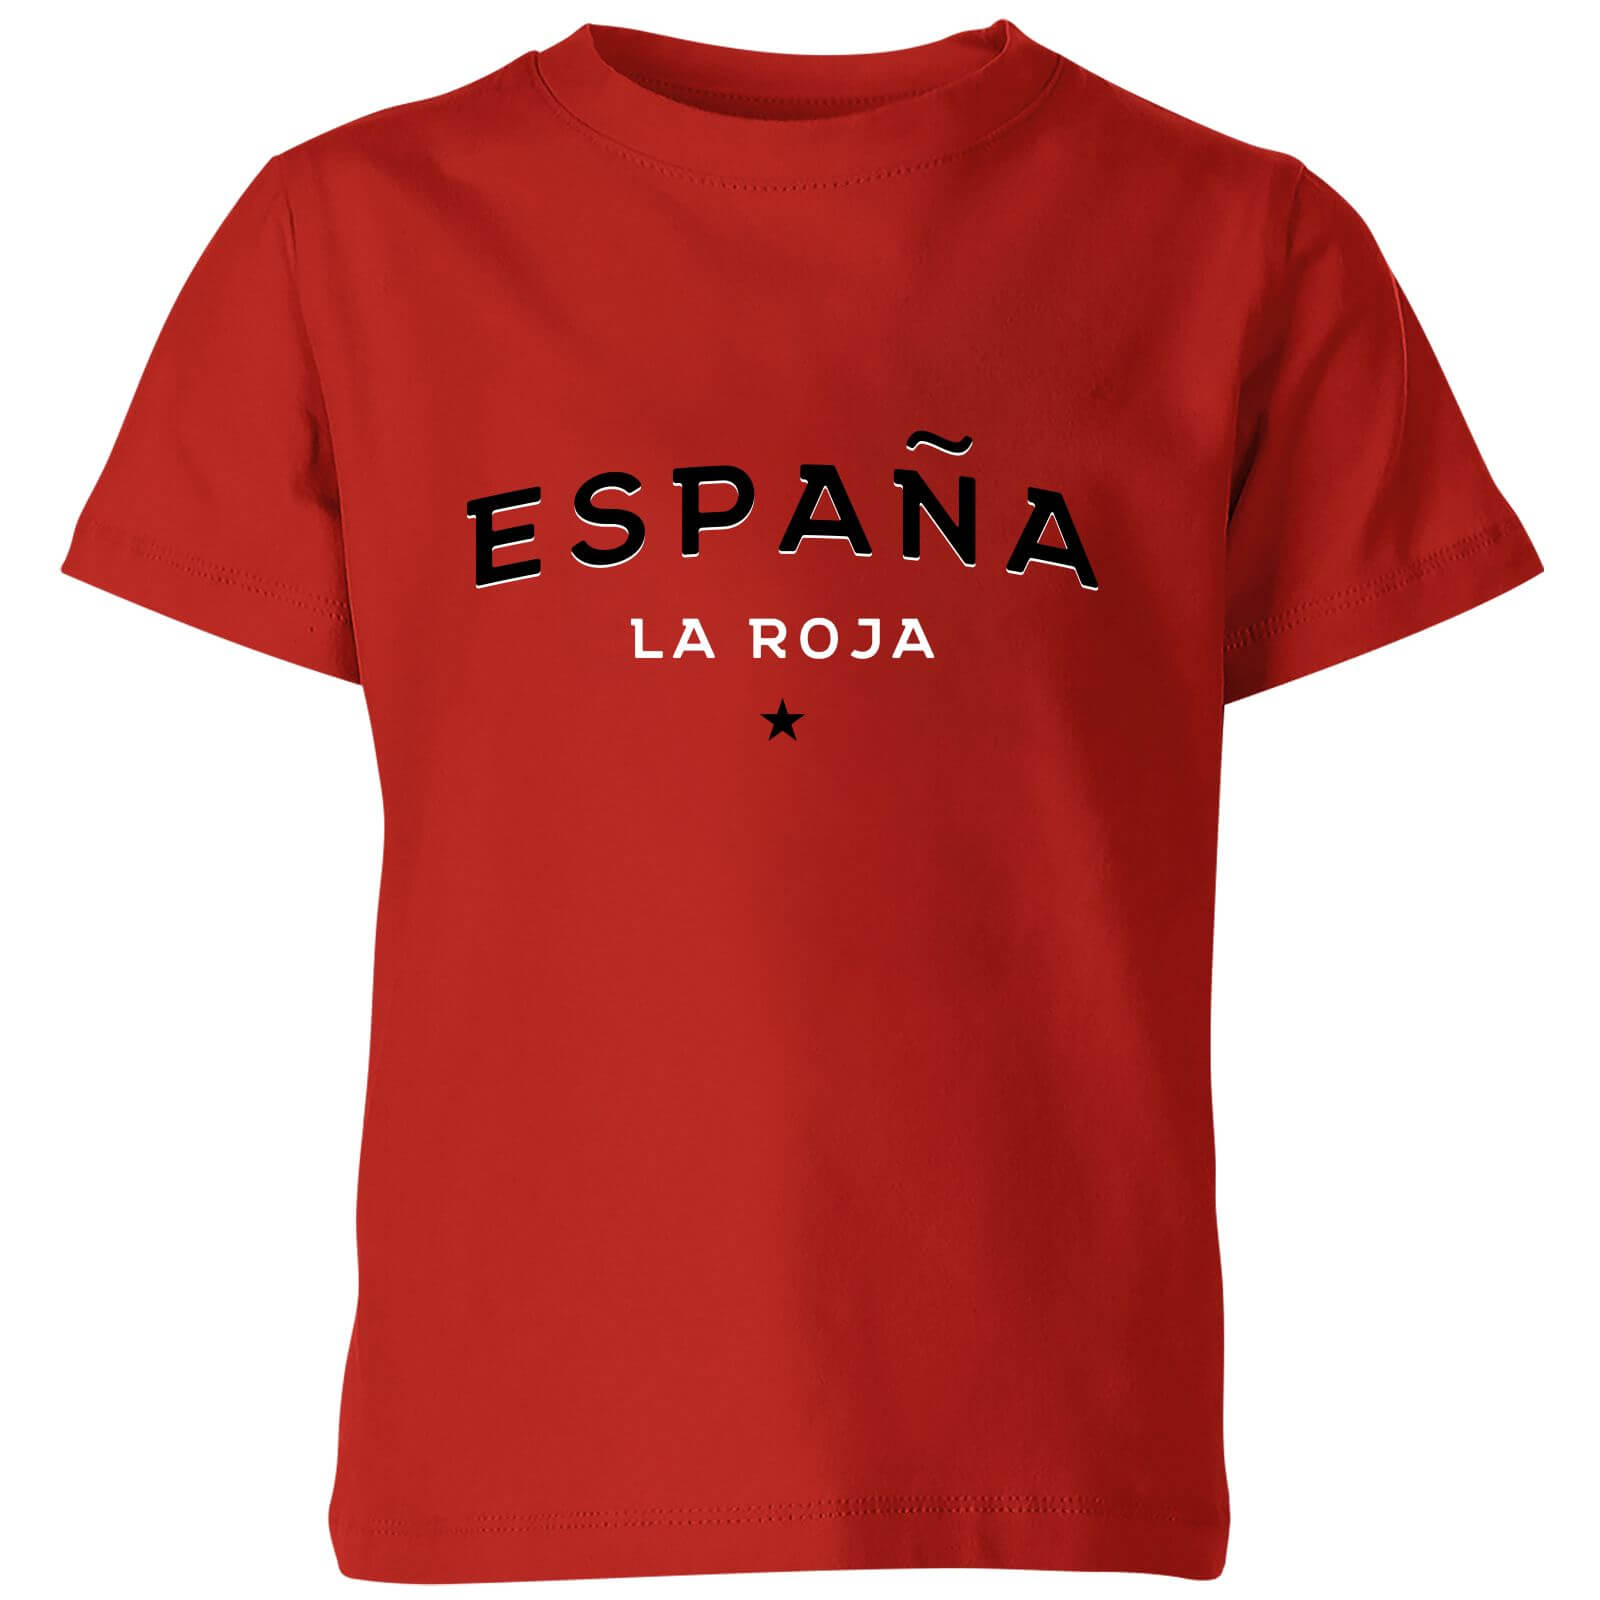 Espana La Roja Kids' T-Shirt - Red - 3-4 Years - Red